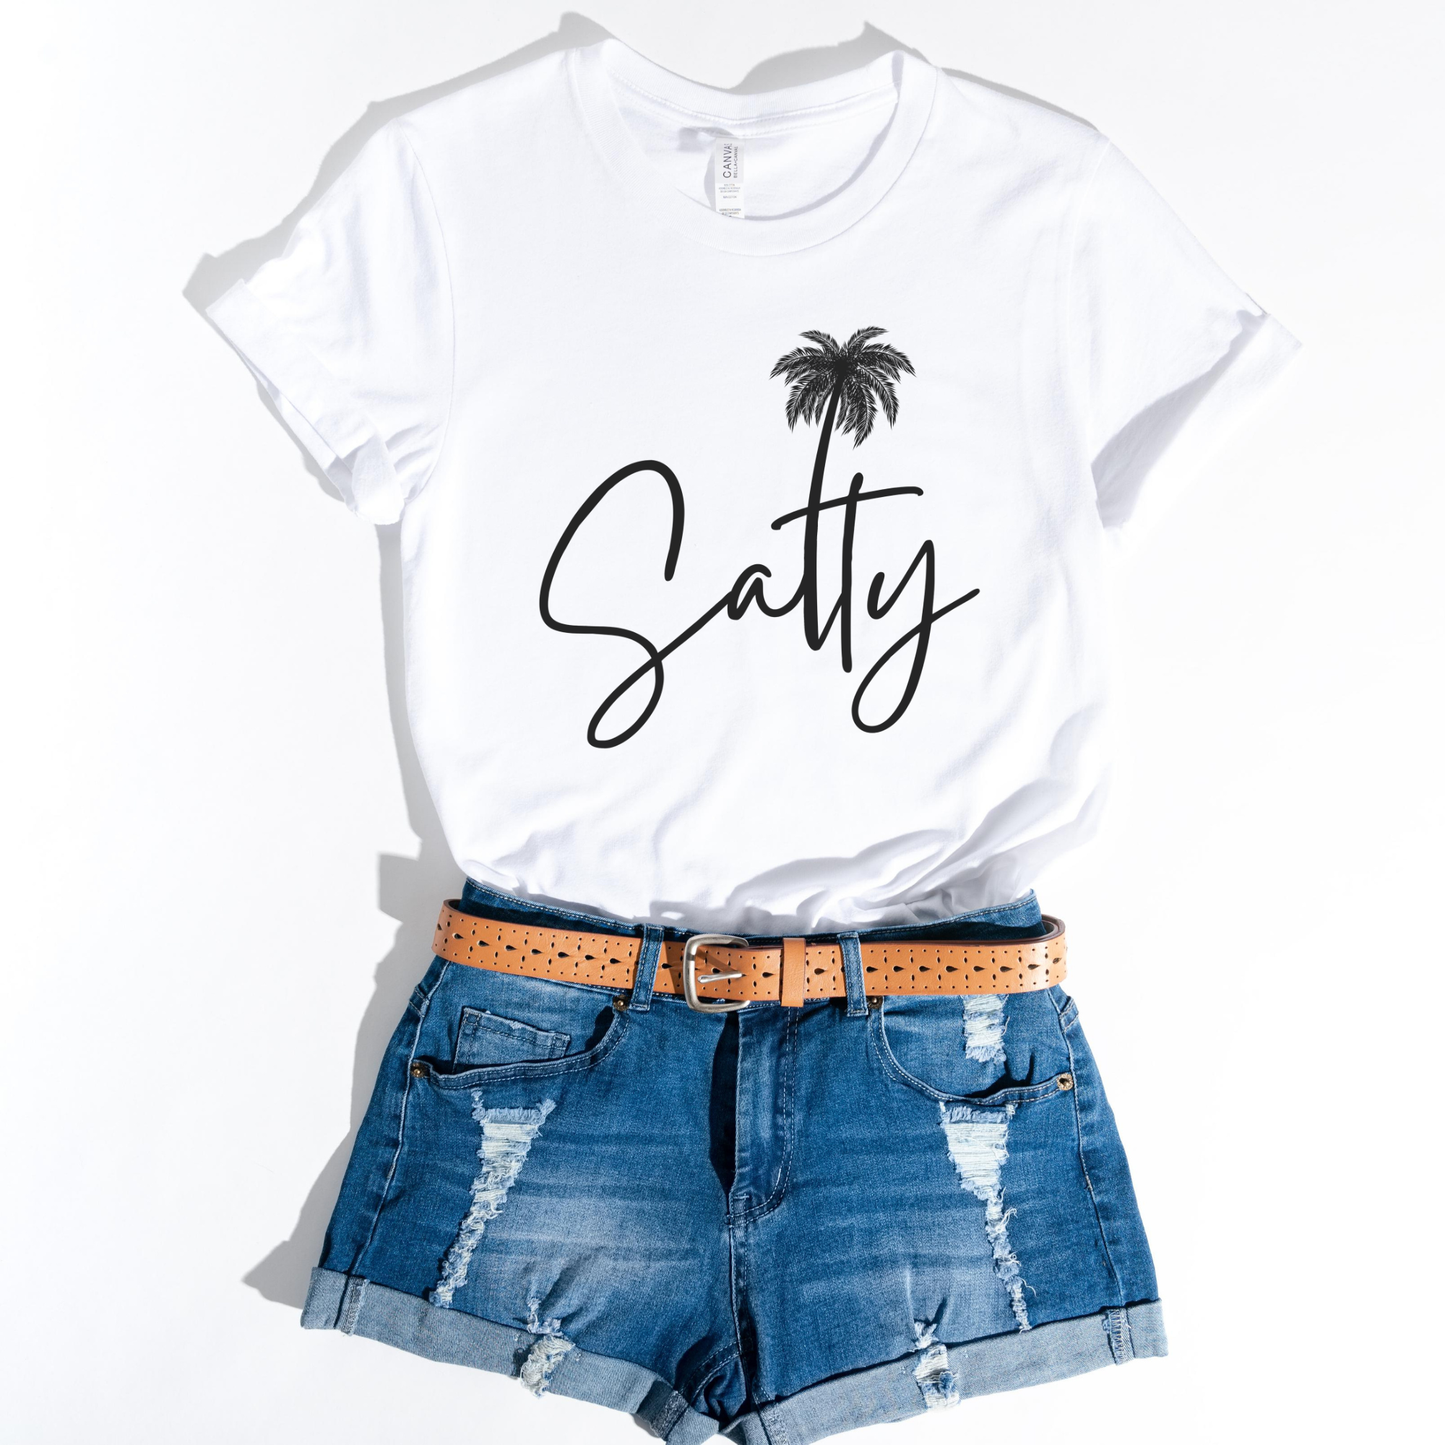 Trendznmore - Salty Beach Graphic T-Shirt: Medium / Stonewash Blue $38